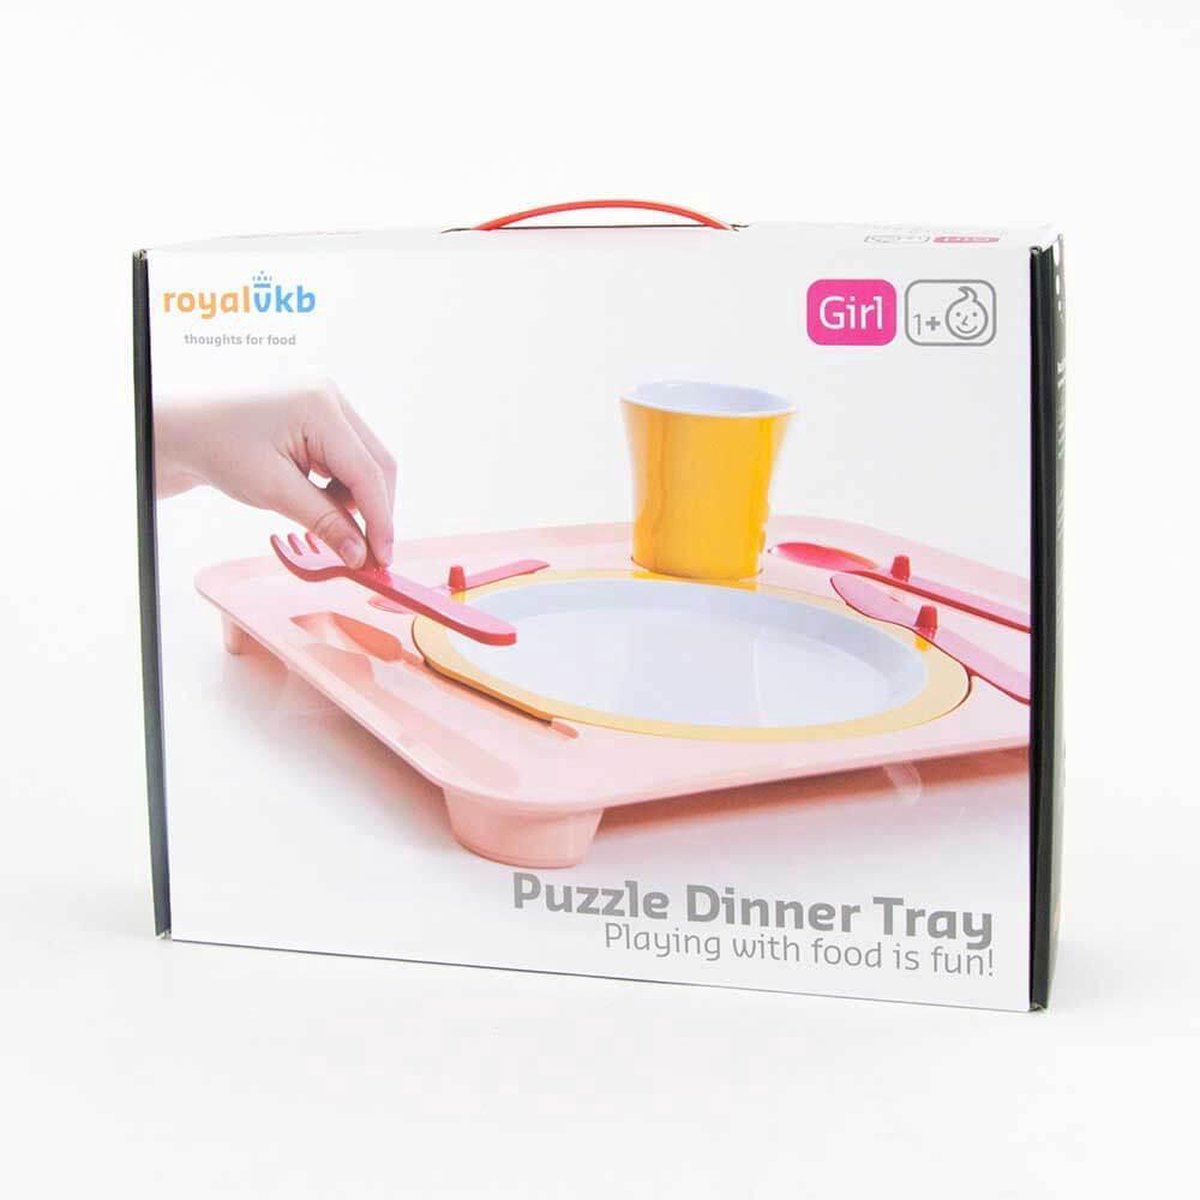 Royal VKB Puzzle Dinner Tray - Girl | bol.com